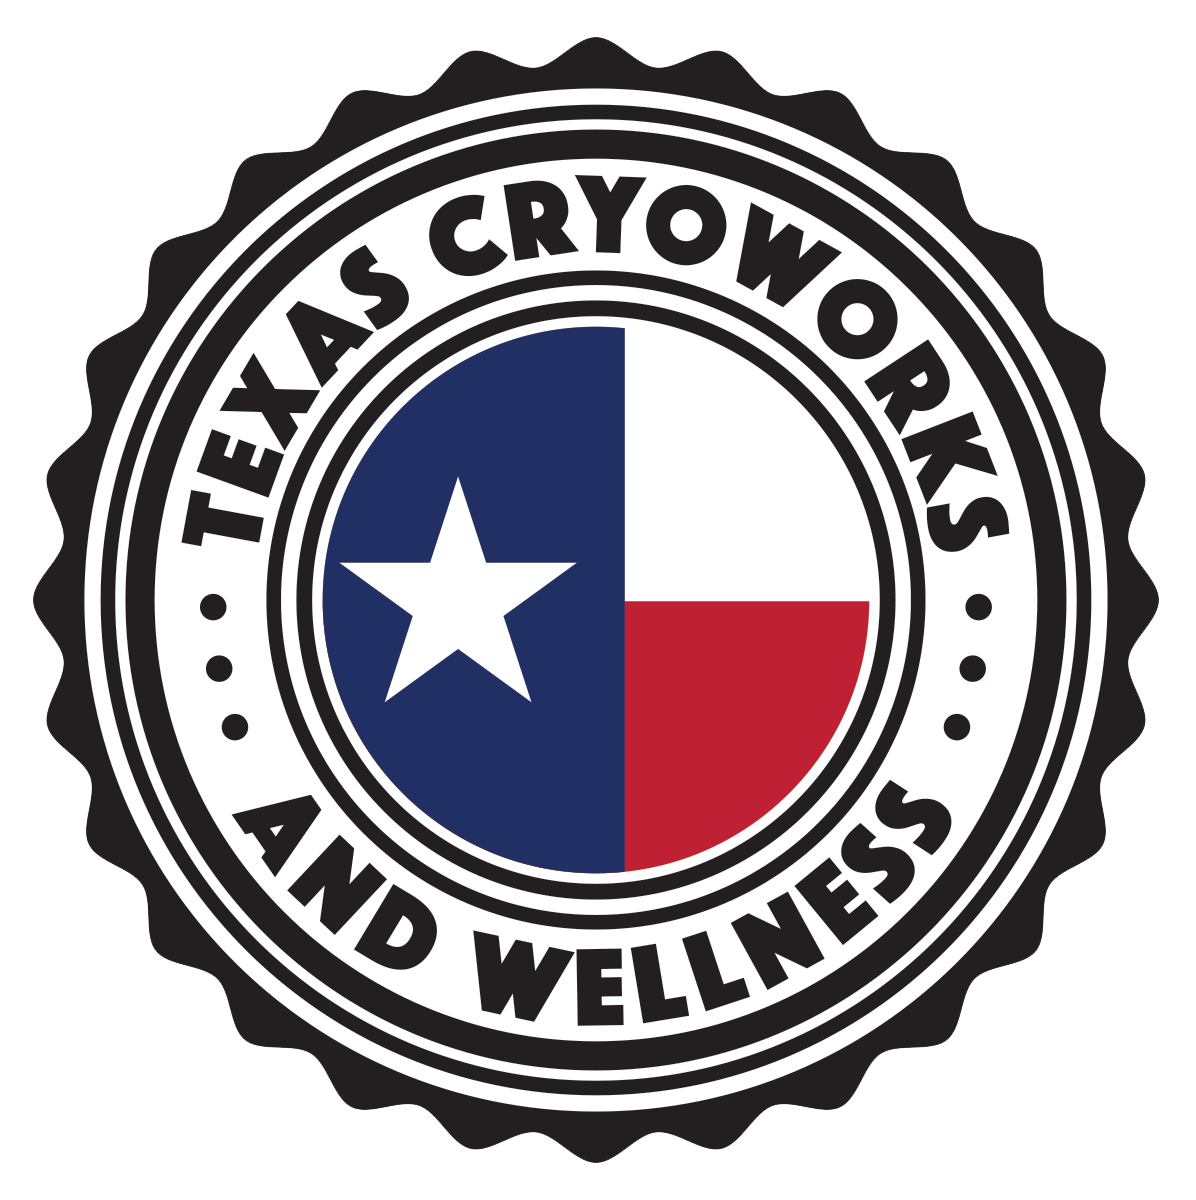 Texas Cryoworks and Wellness